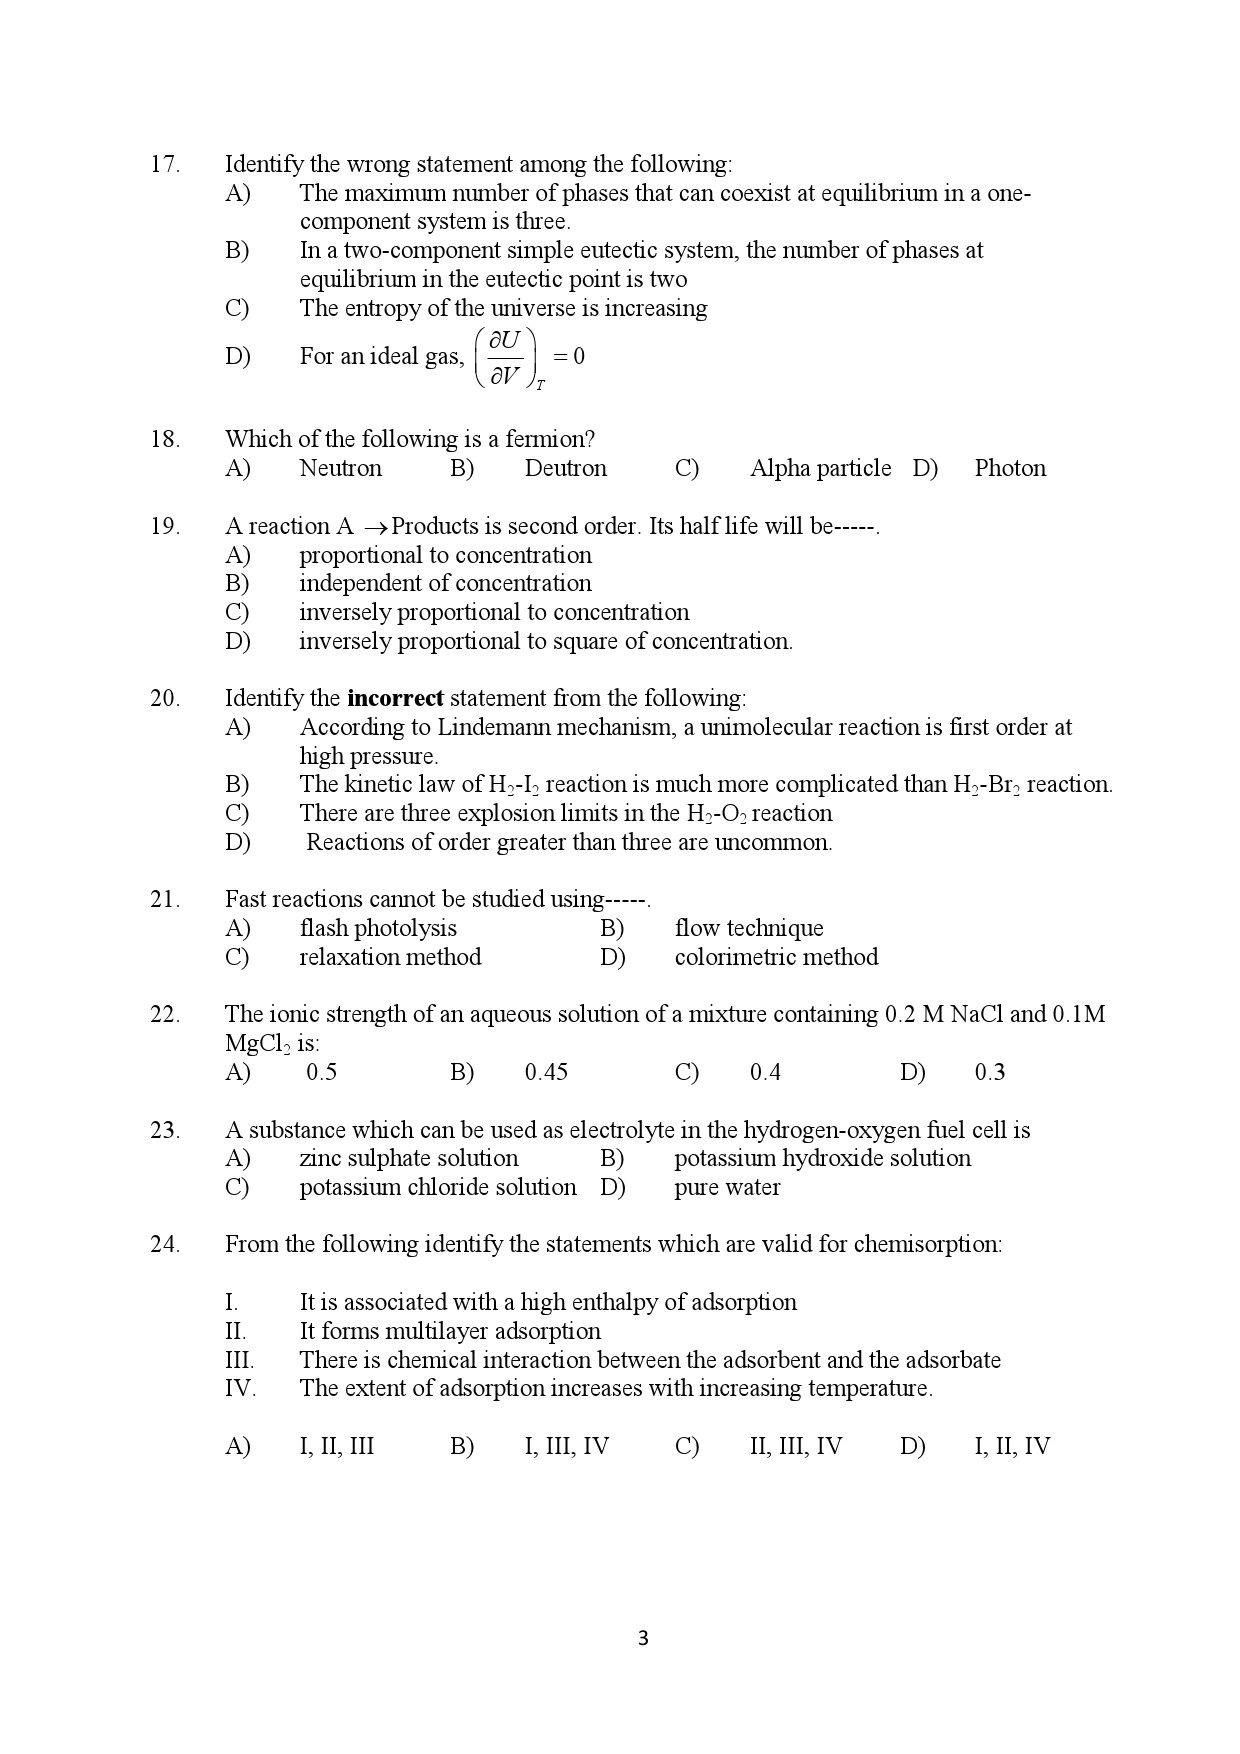 Kerala SET Chemistry Exam Question Paper February 2020 3